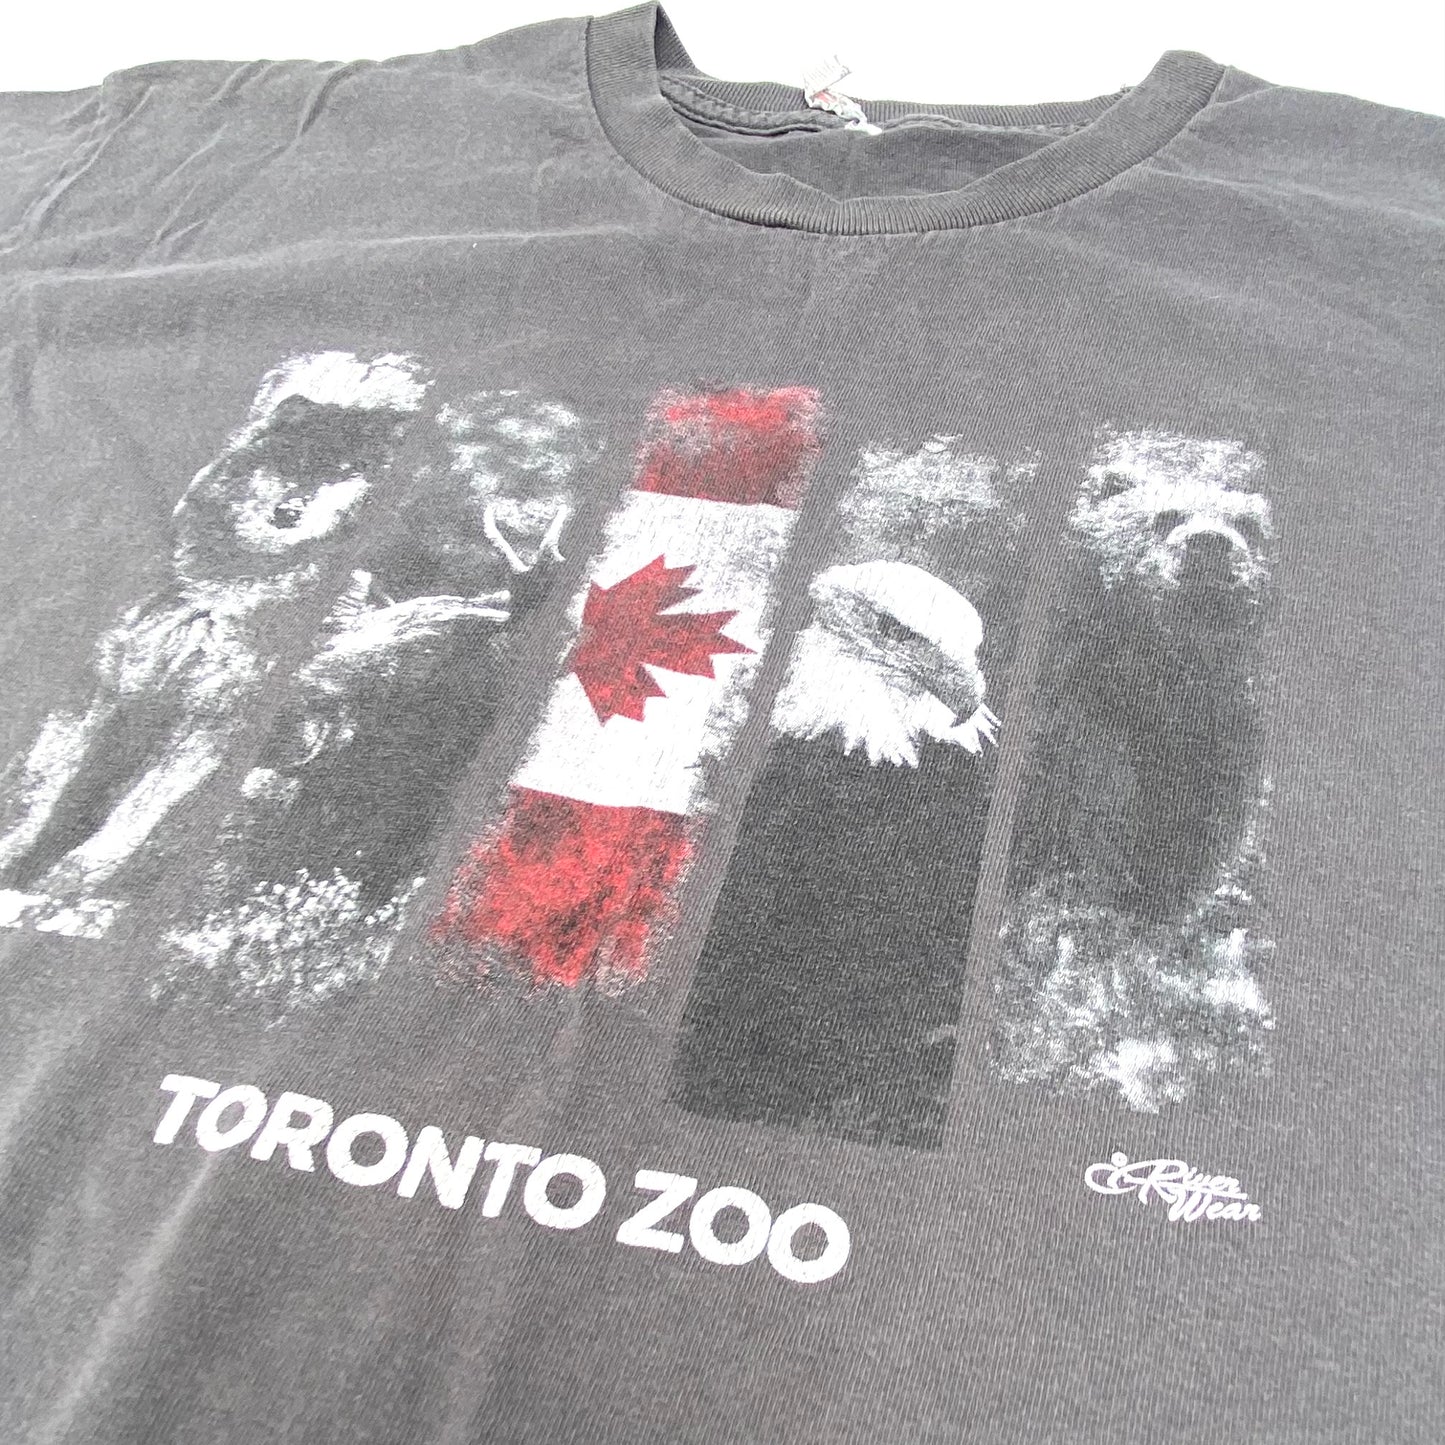 Secondhand Toronto Zoo T-shirt